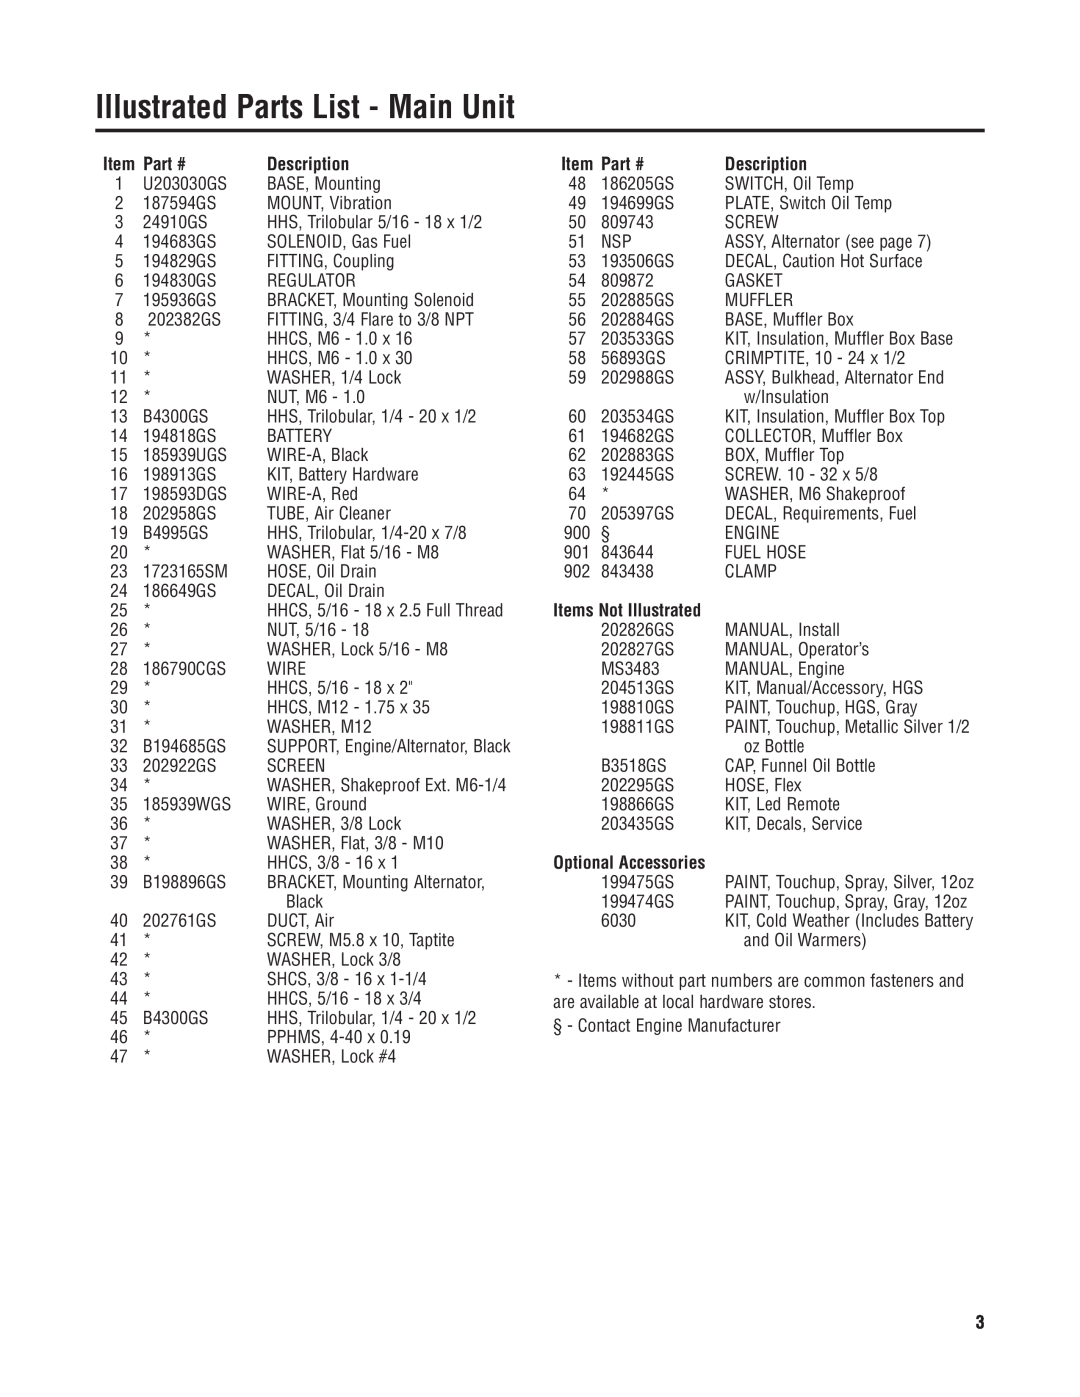 Briggs & Stratton 040228-1 manual Illustrated Parts List - Main Unit, Description, Items Not Illustrated 